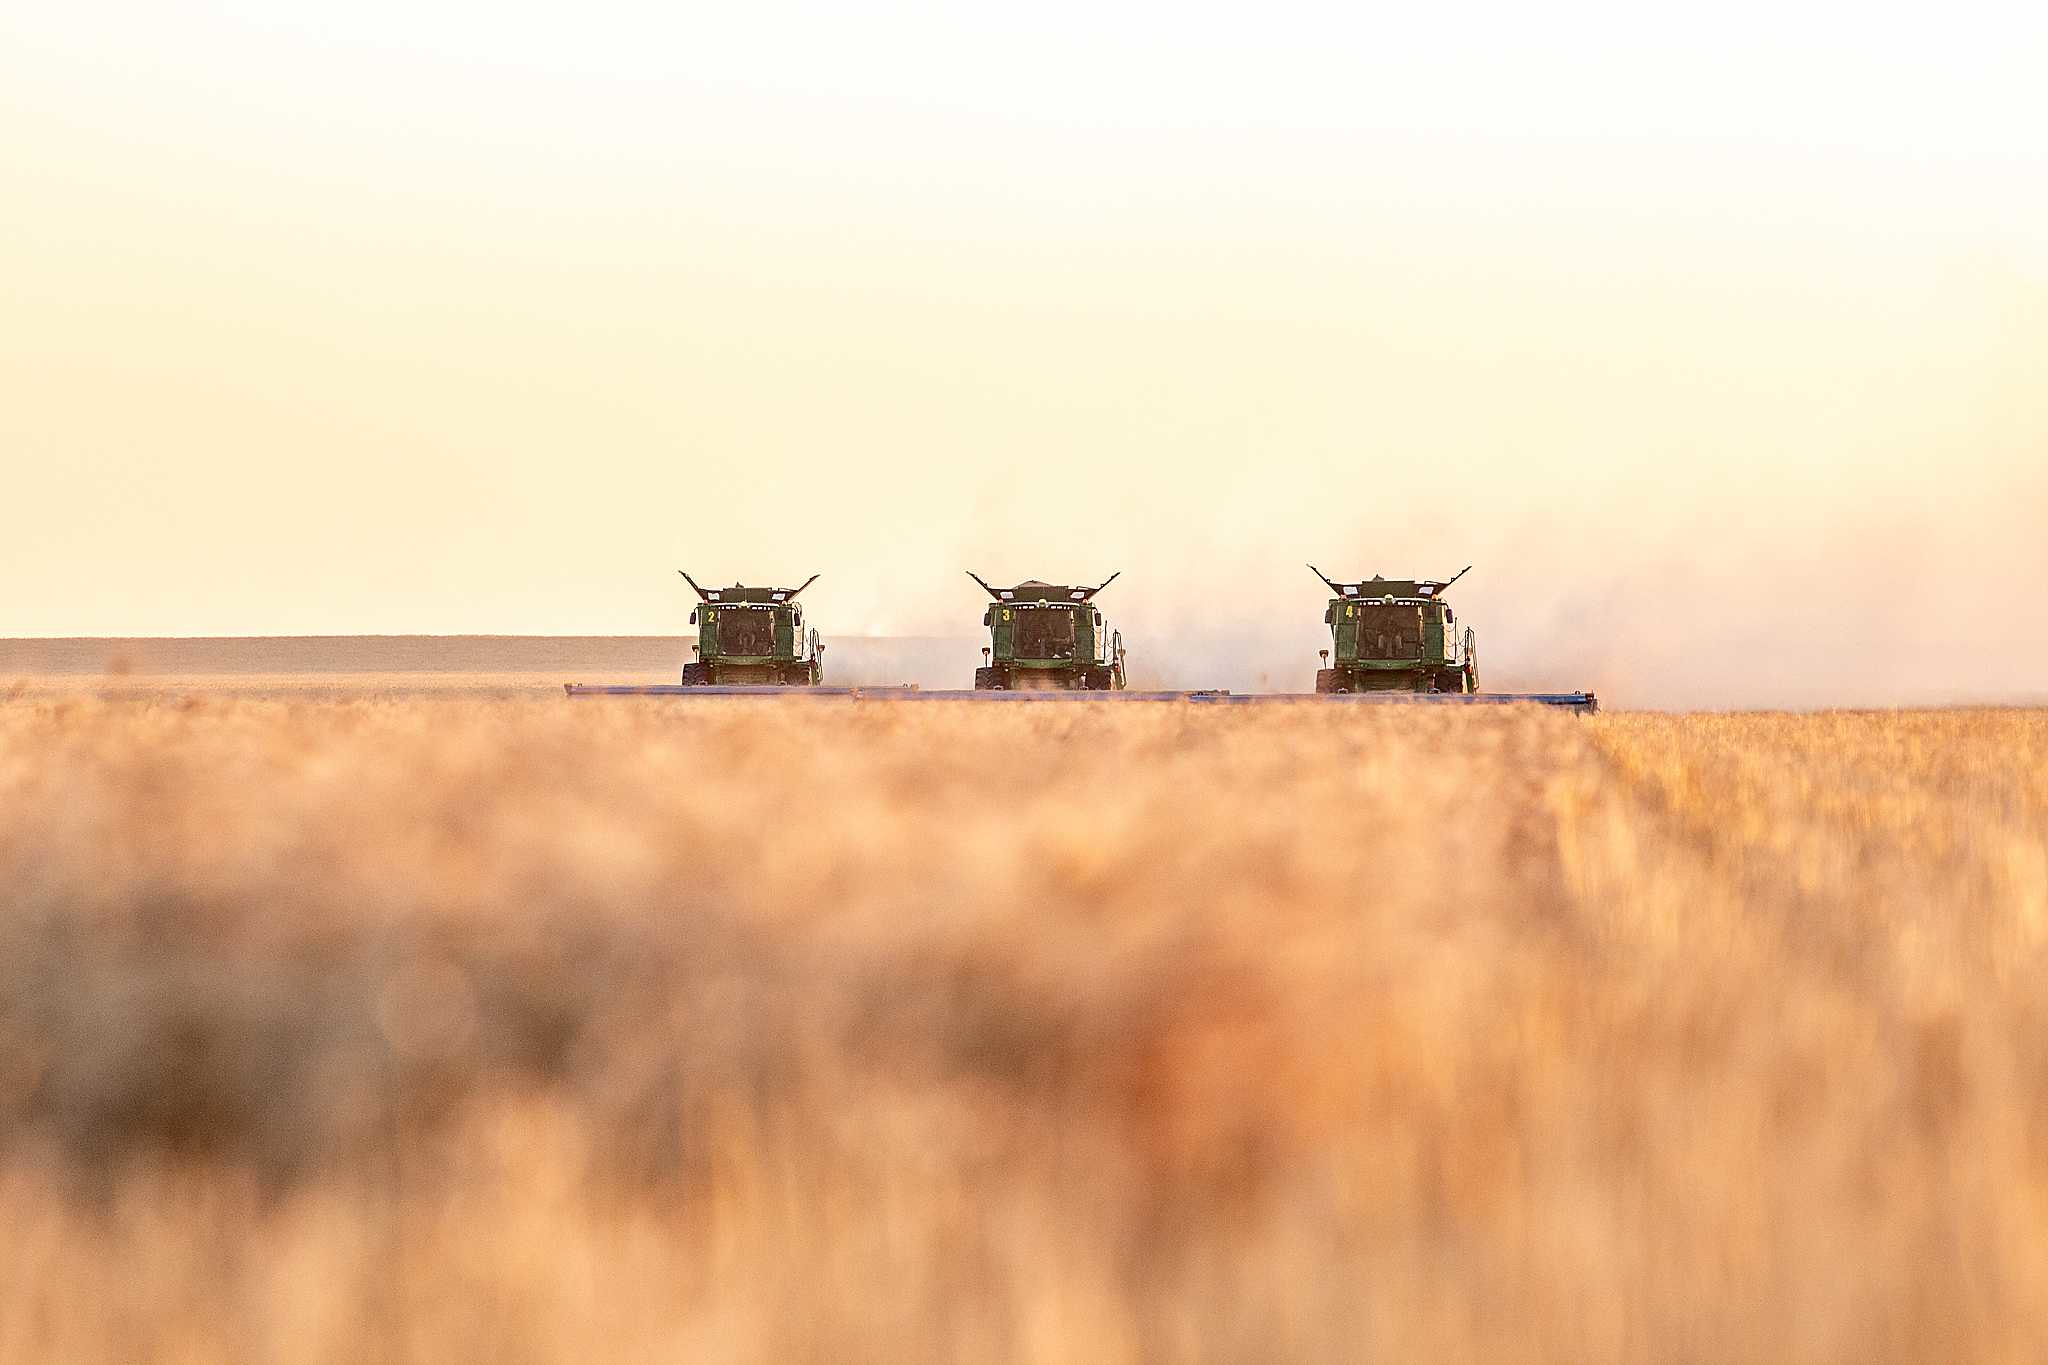 High Plains Harvesting 2019